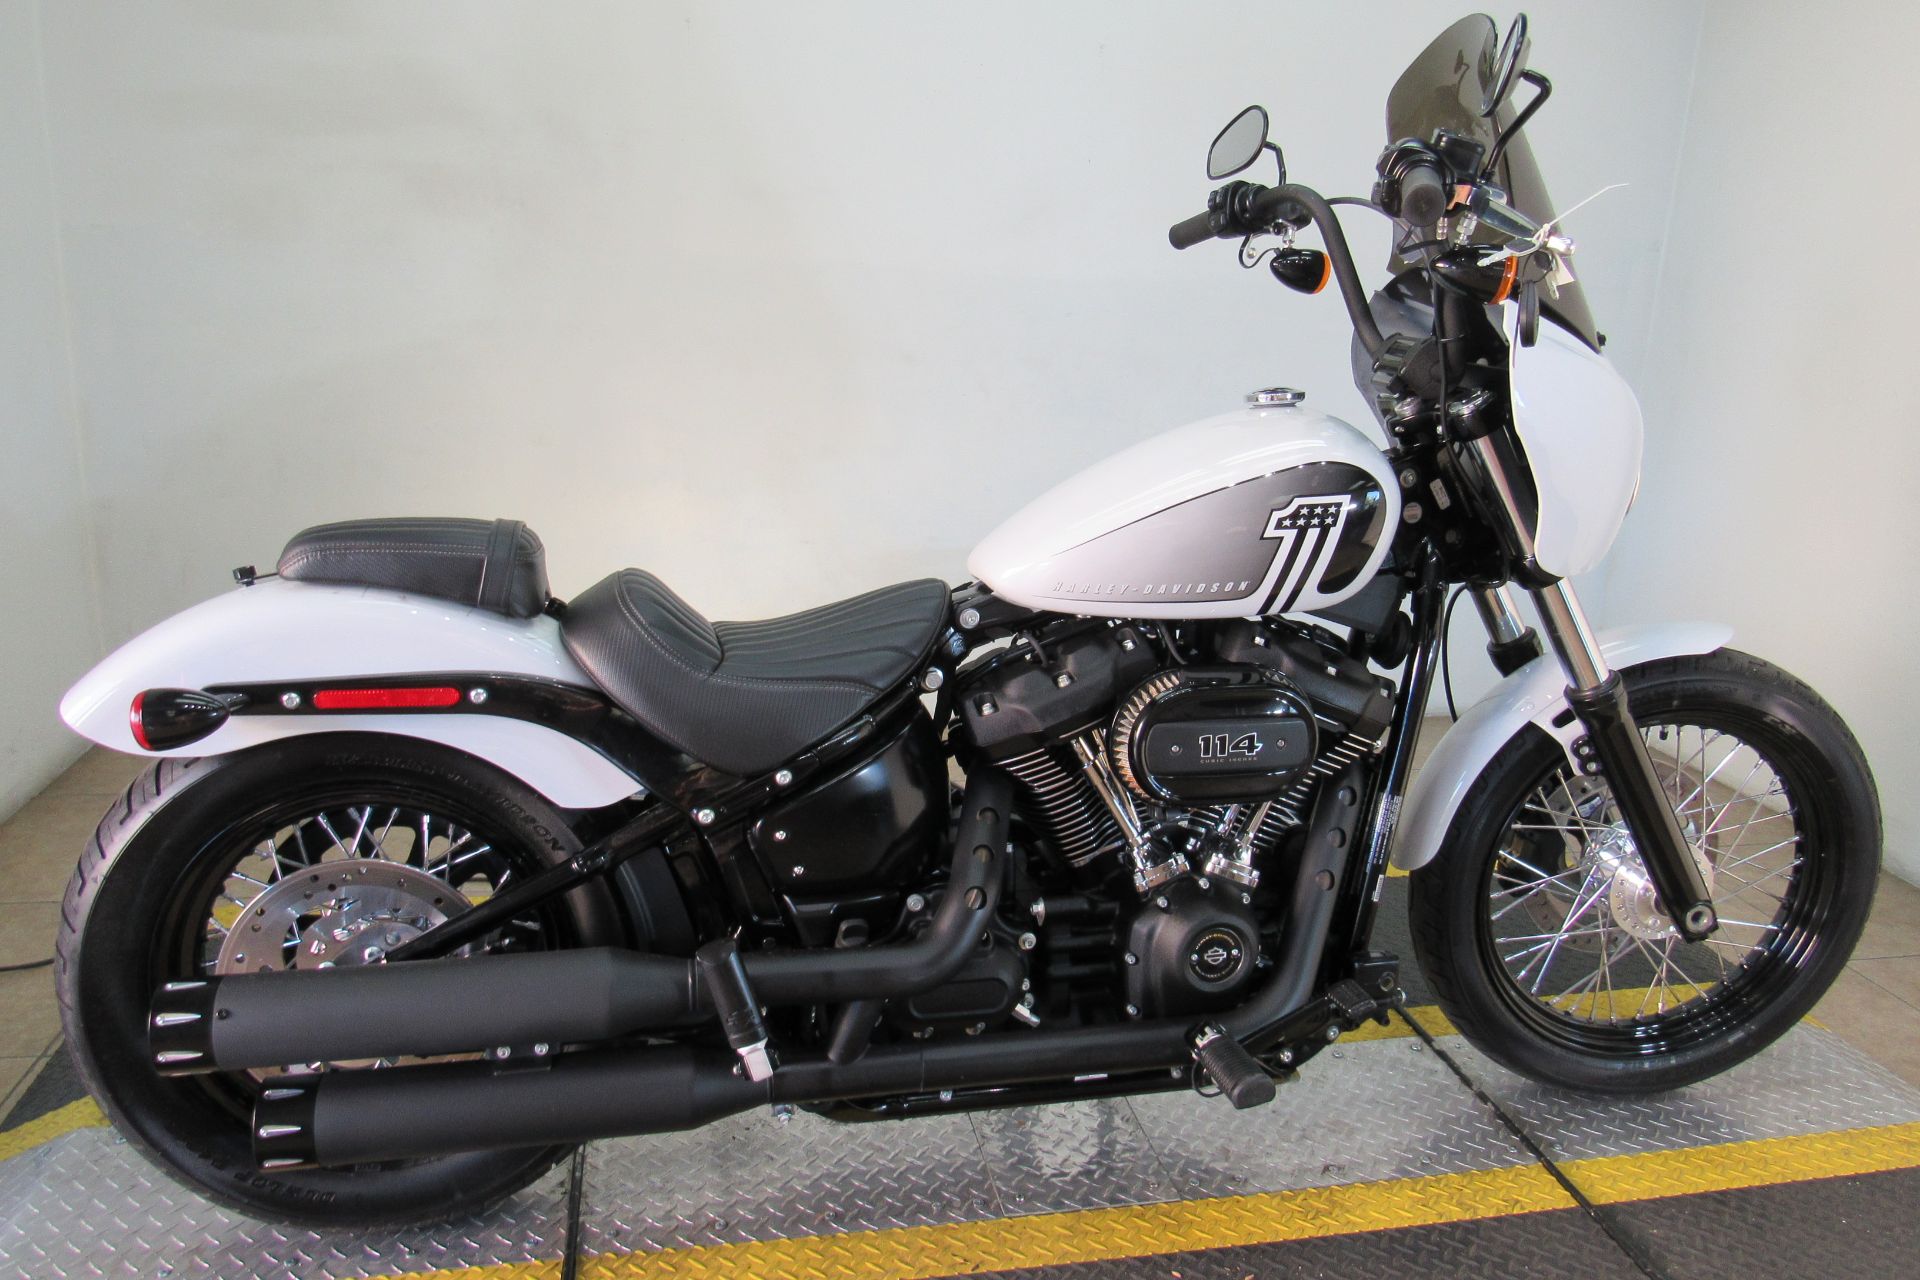 2021 Harley-Davidson Street Bob® 114 in Temecula, California - Photo 5